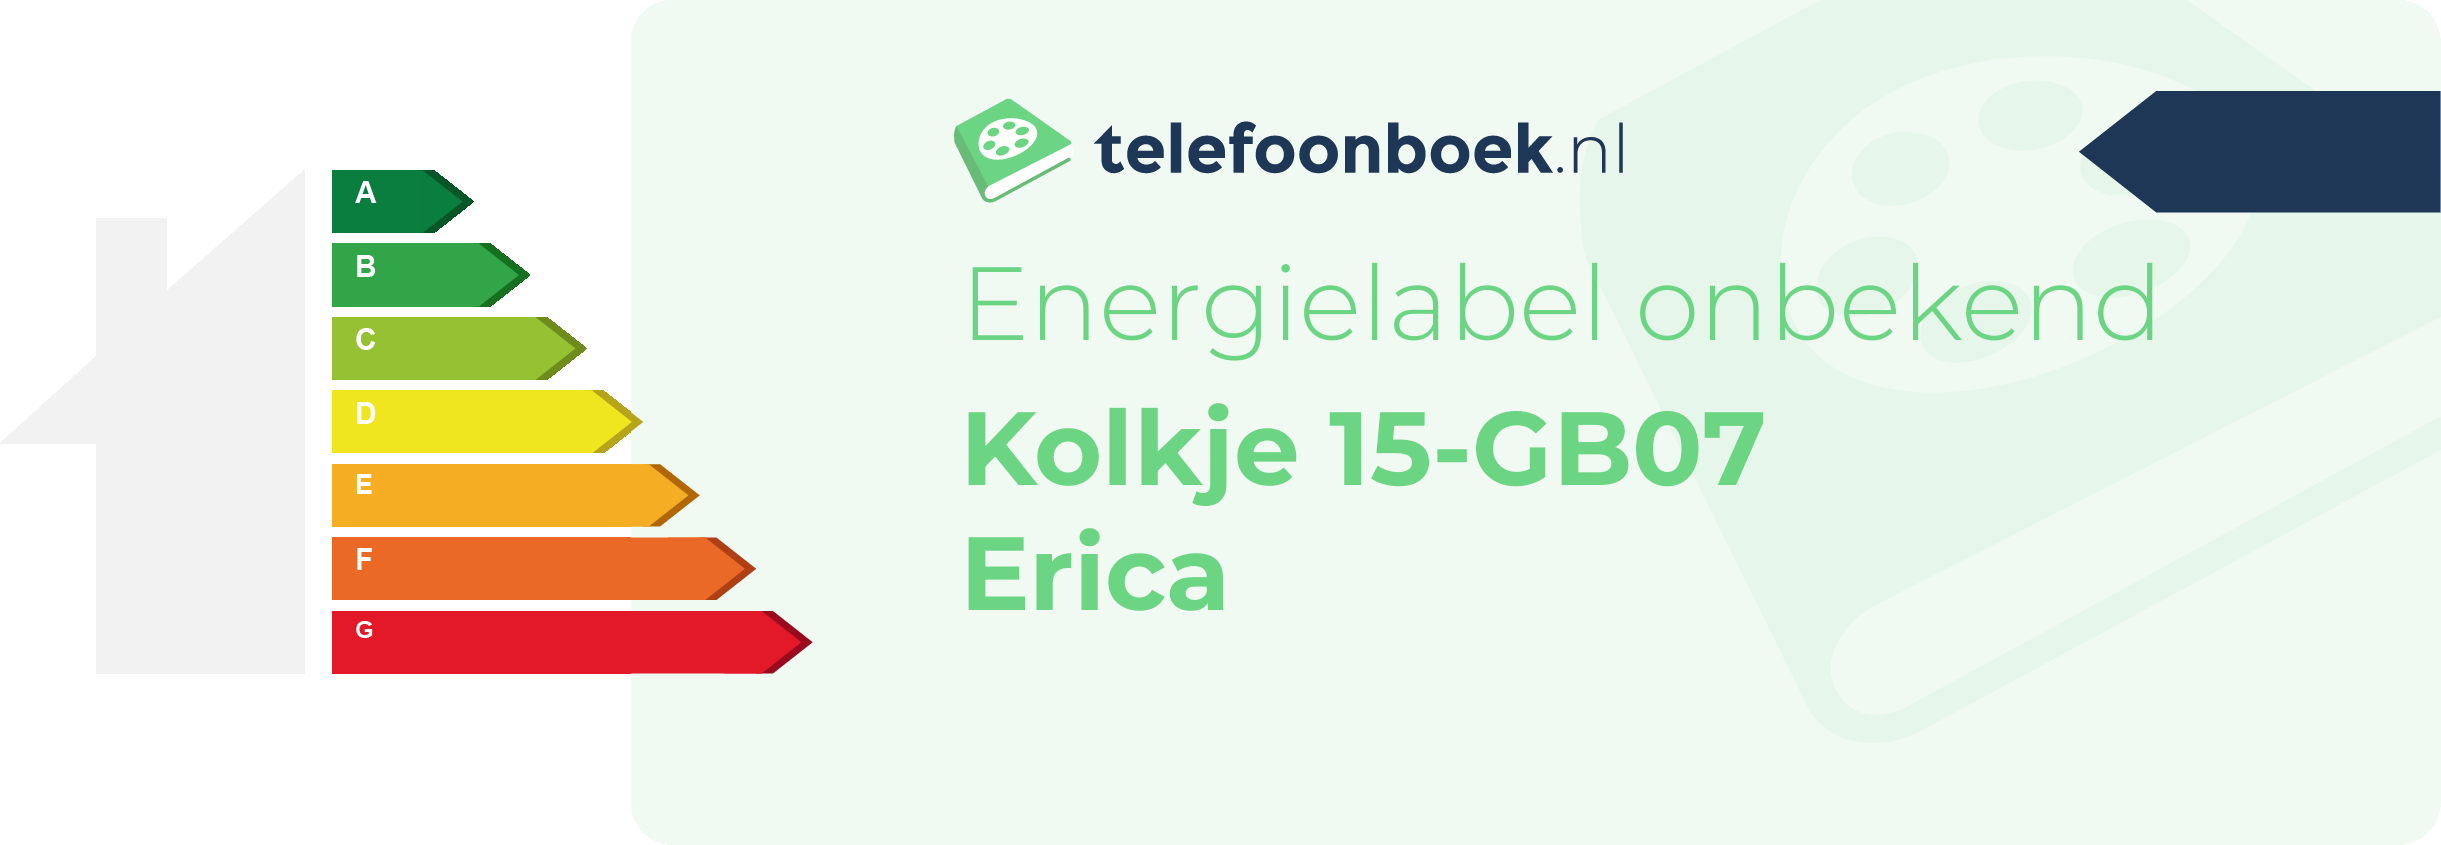 Energielabel Kolkje 15-GB07 Erica